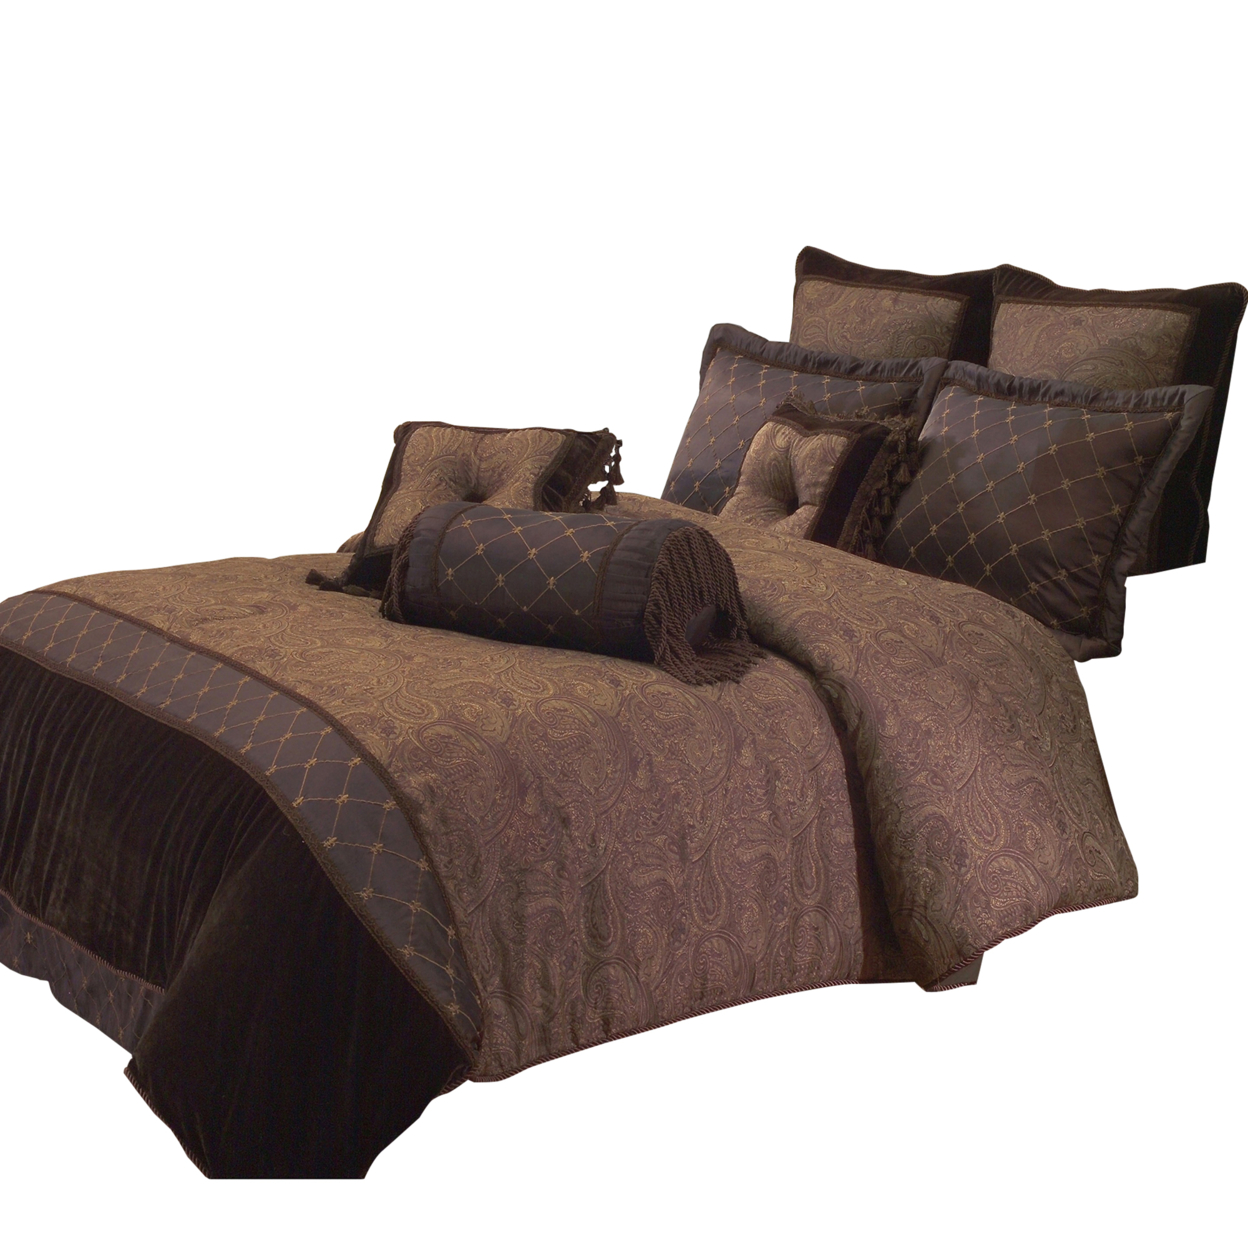 10 Piece King Polyester Comforter Set With Paisley Pattern Design, Brown- Saltoro Sherpi